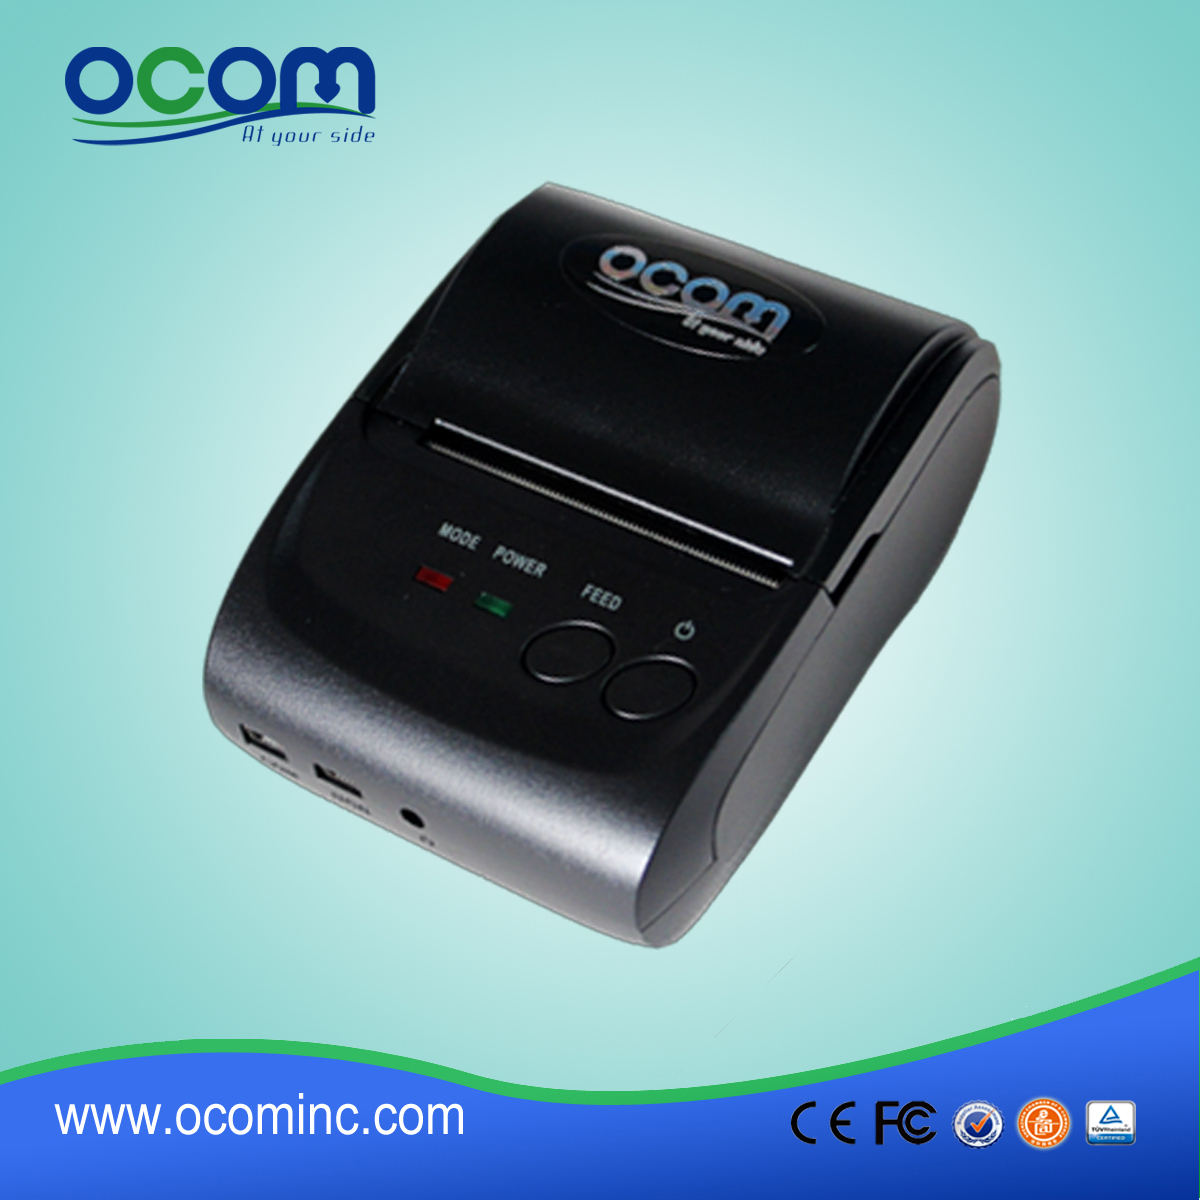 OCPP-M05：58毫米便携式蓝牙热敏打印机带SDK